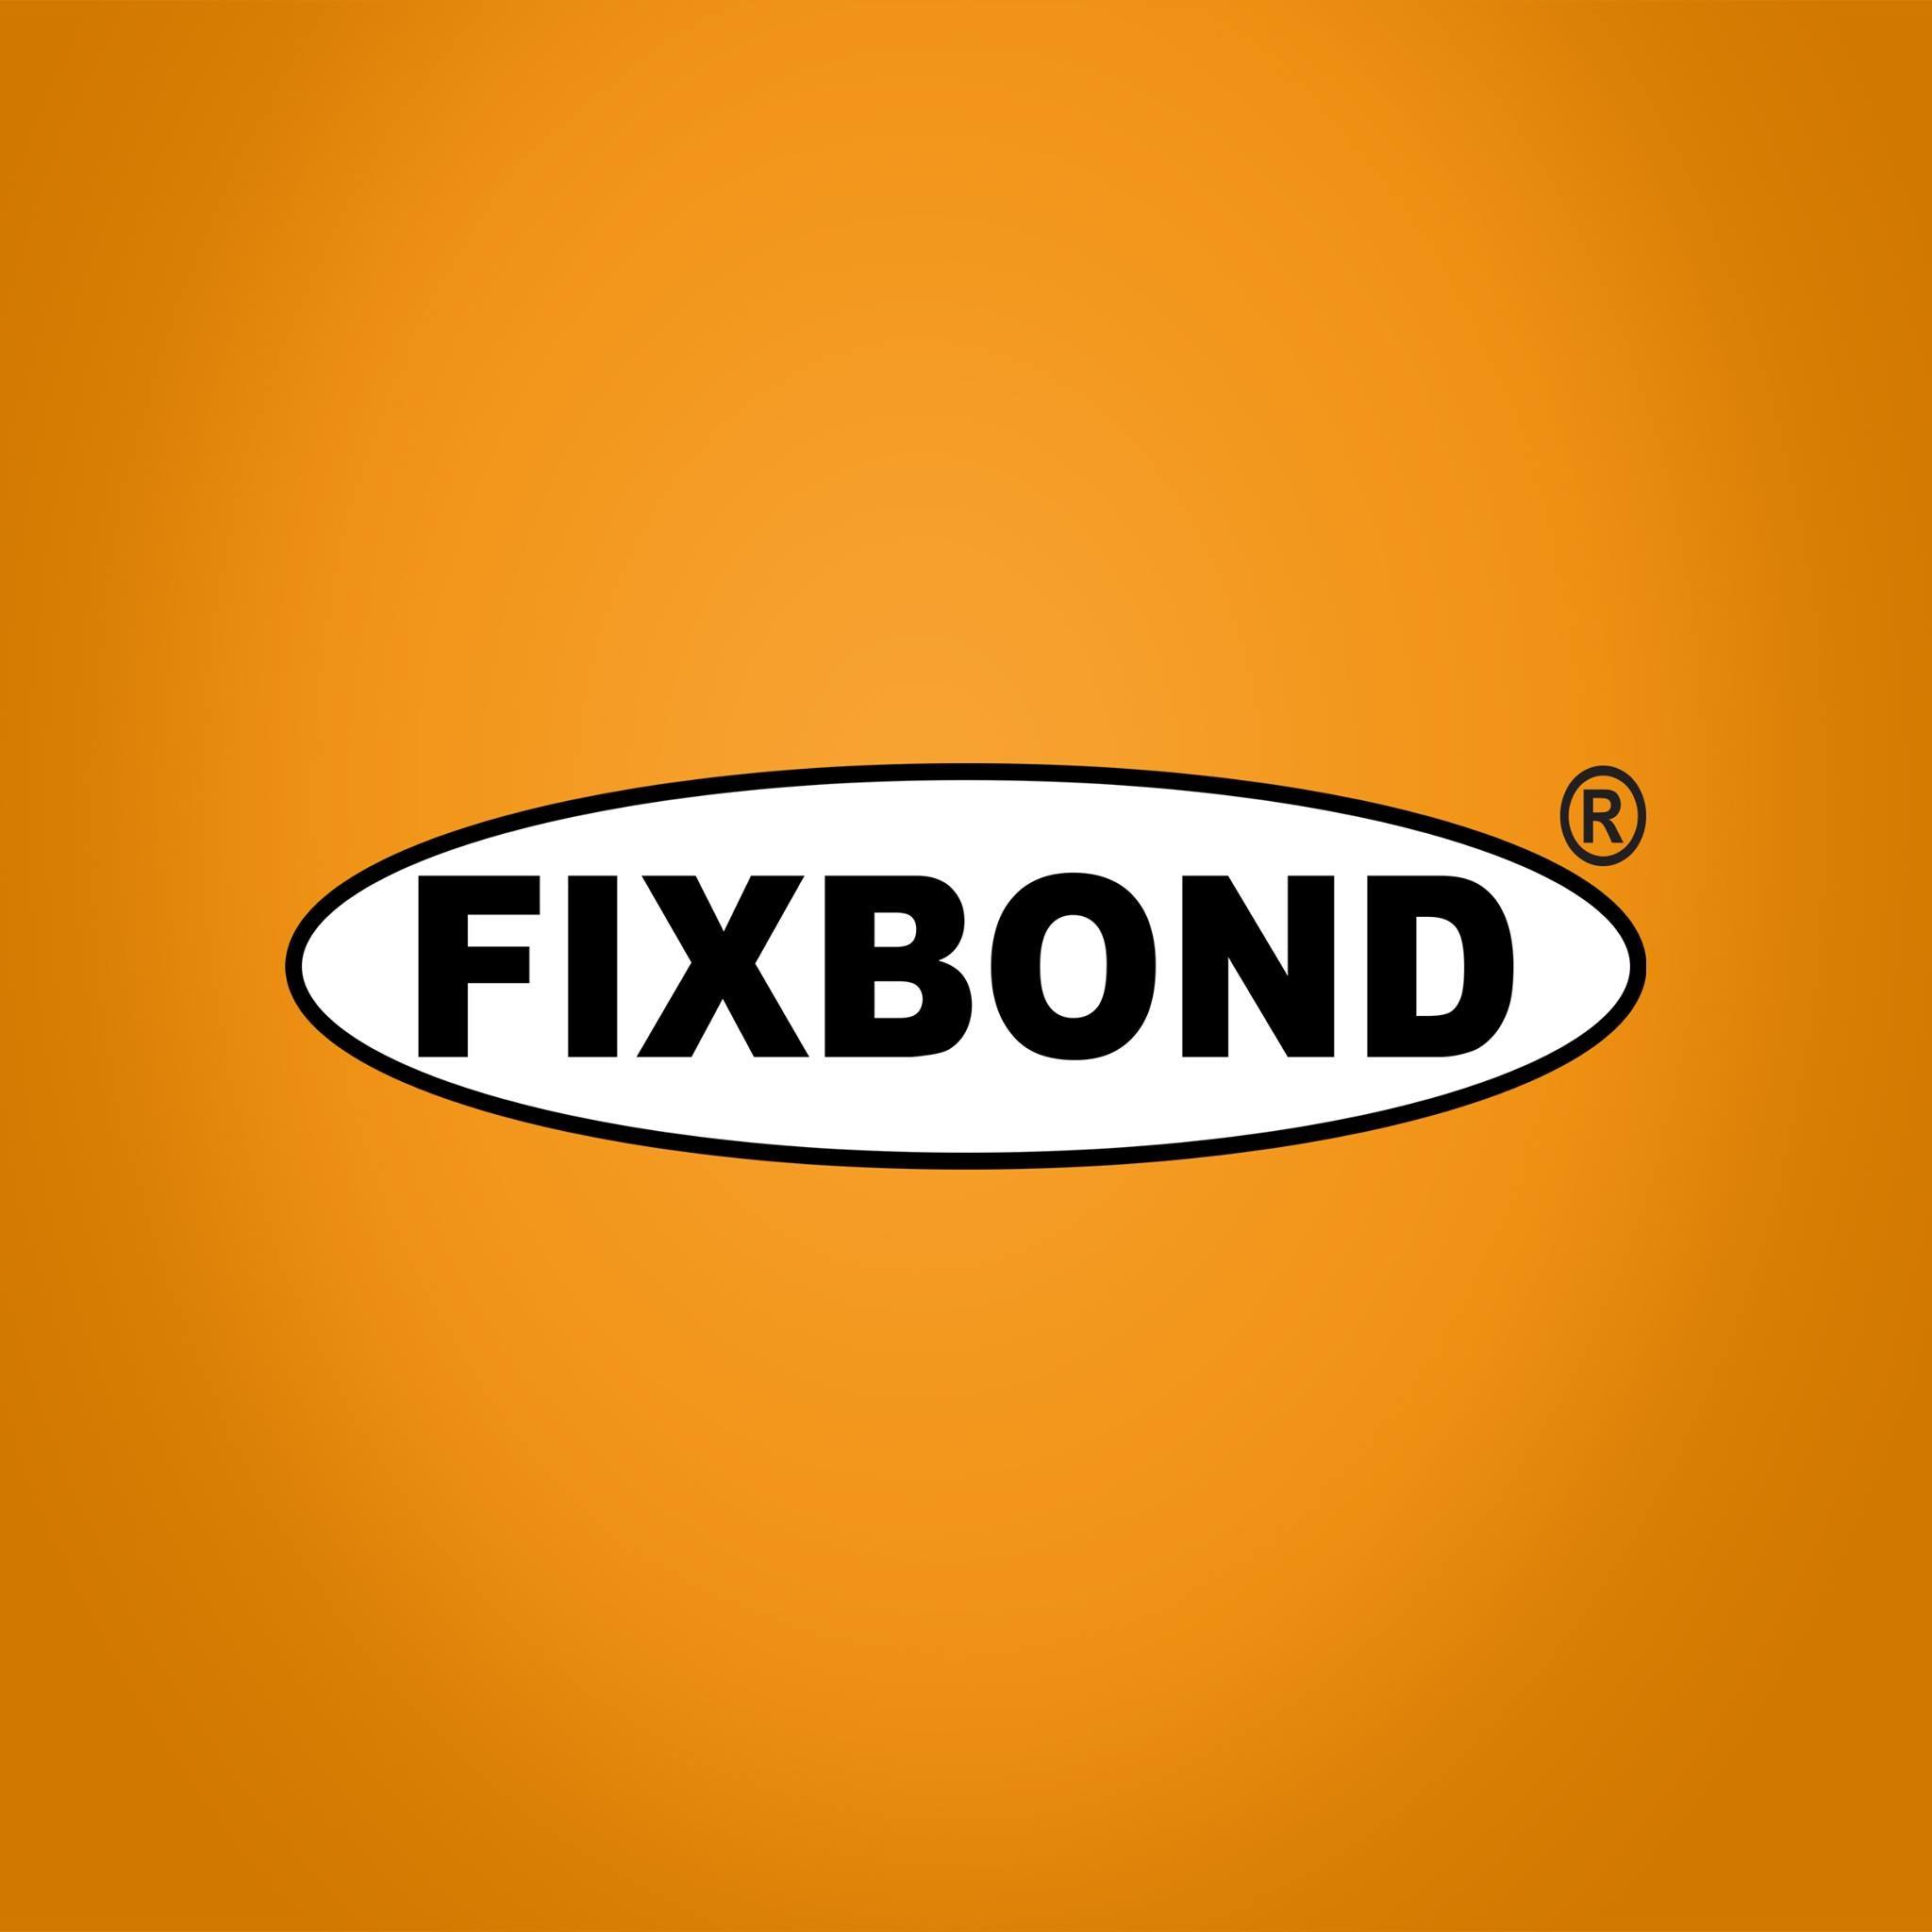 Fixbond